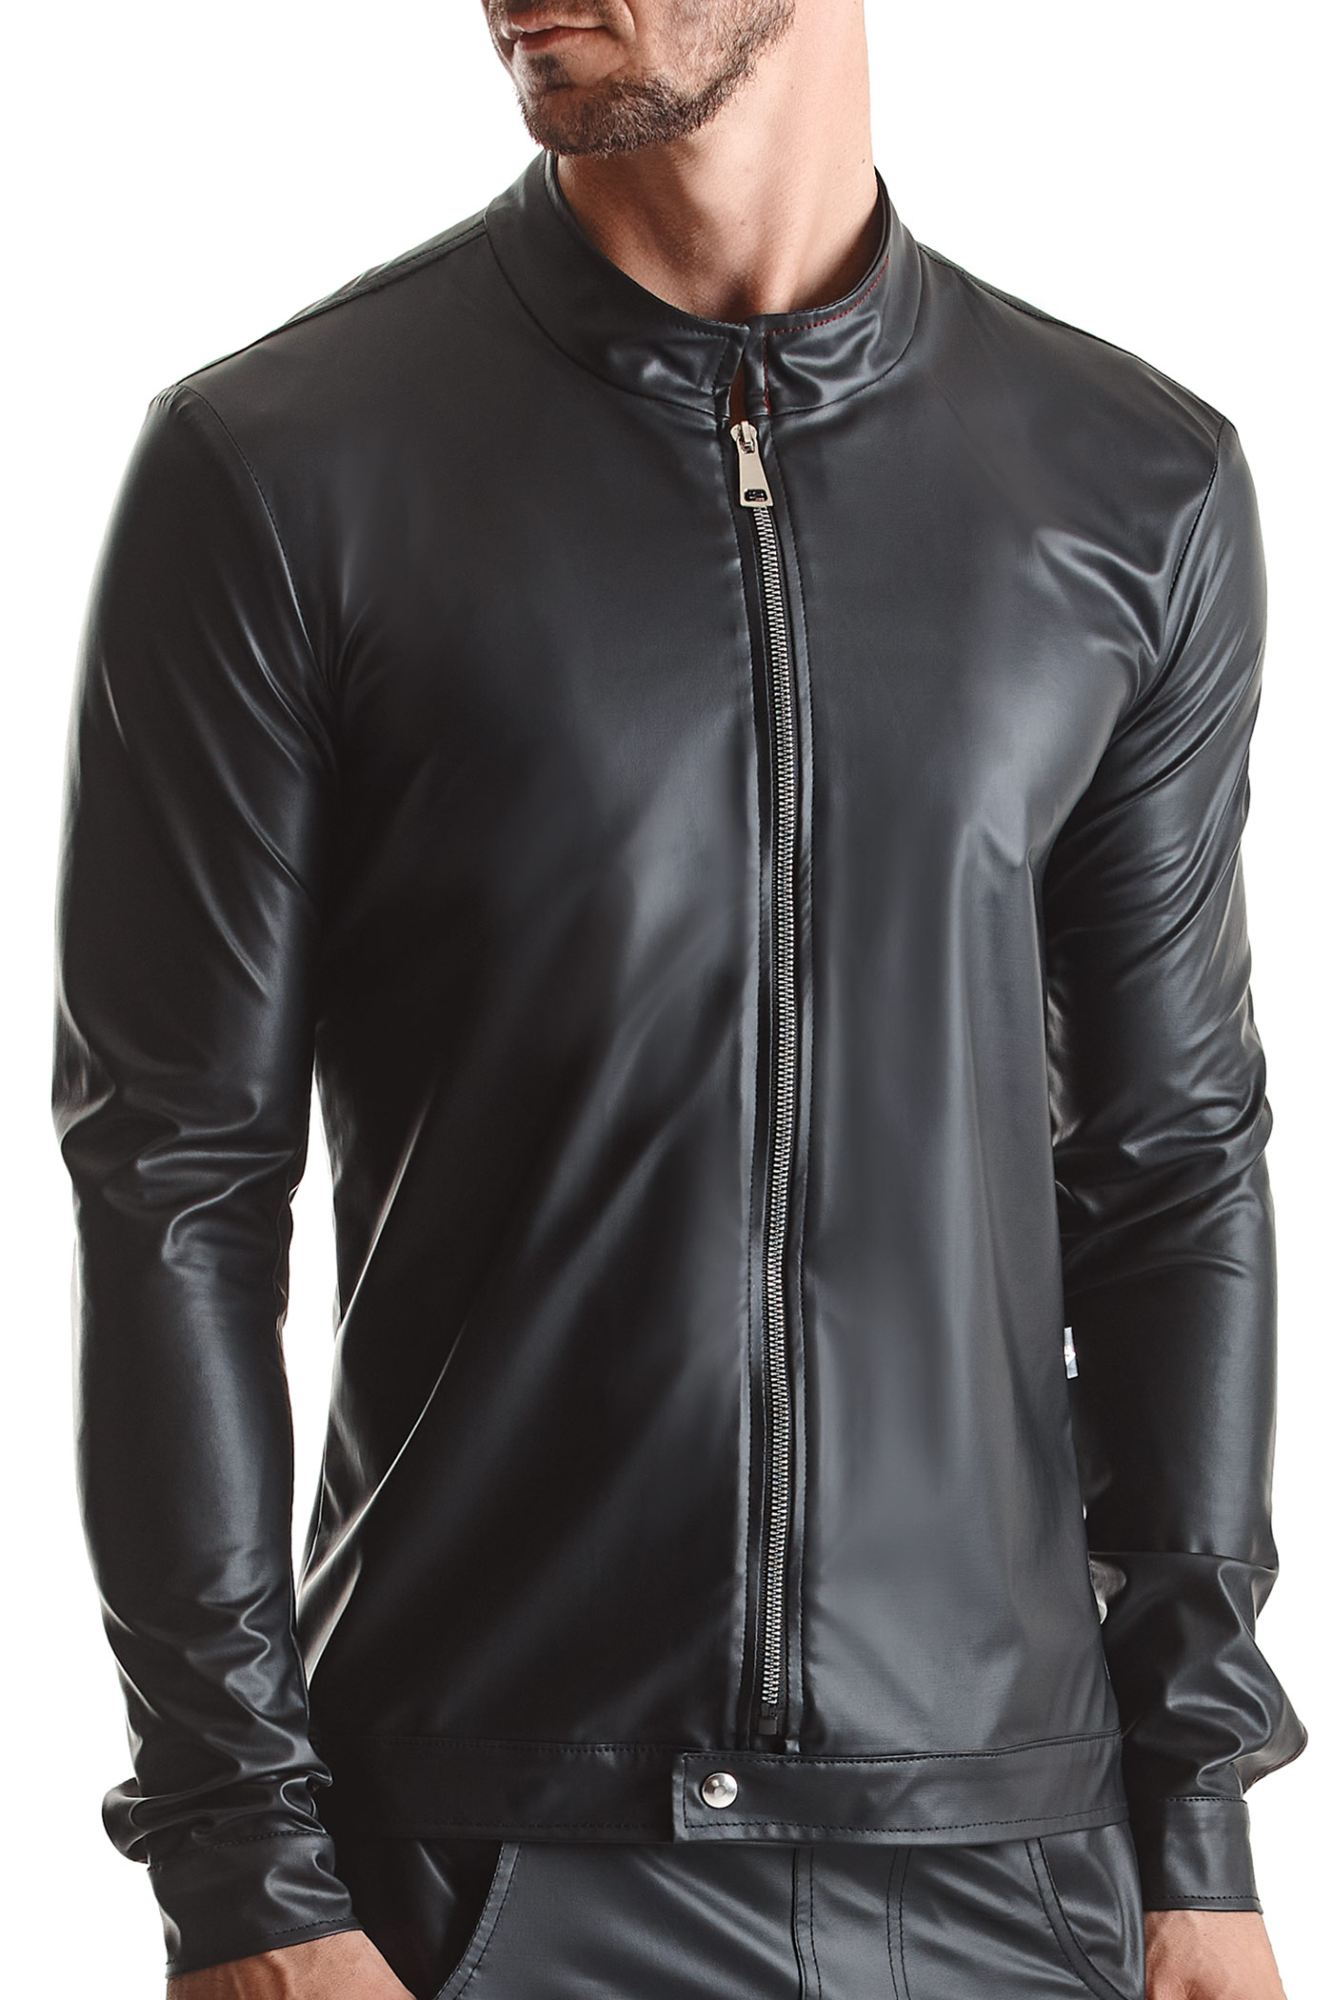 RMGiorgio001 – black jacket – L